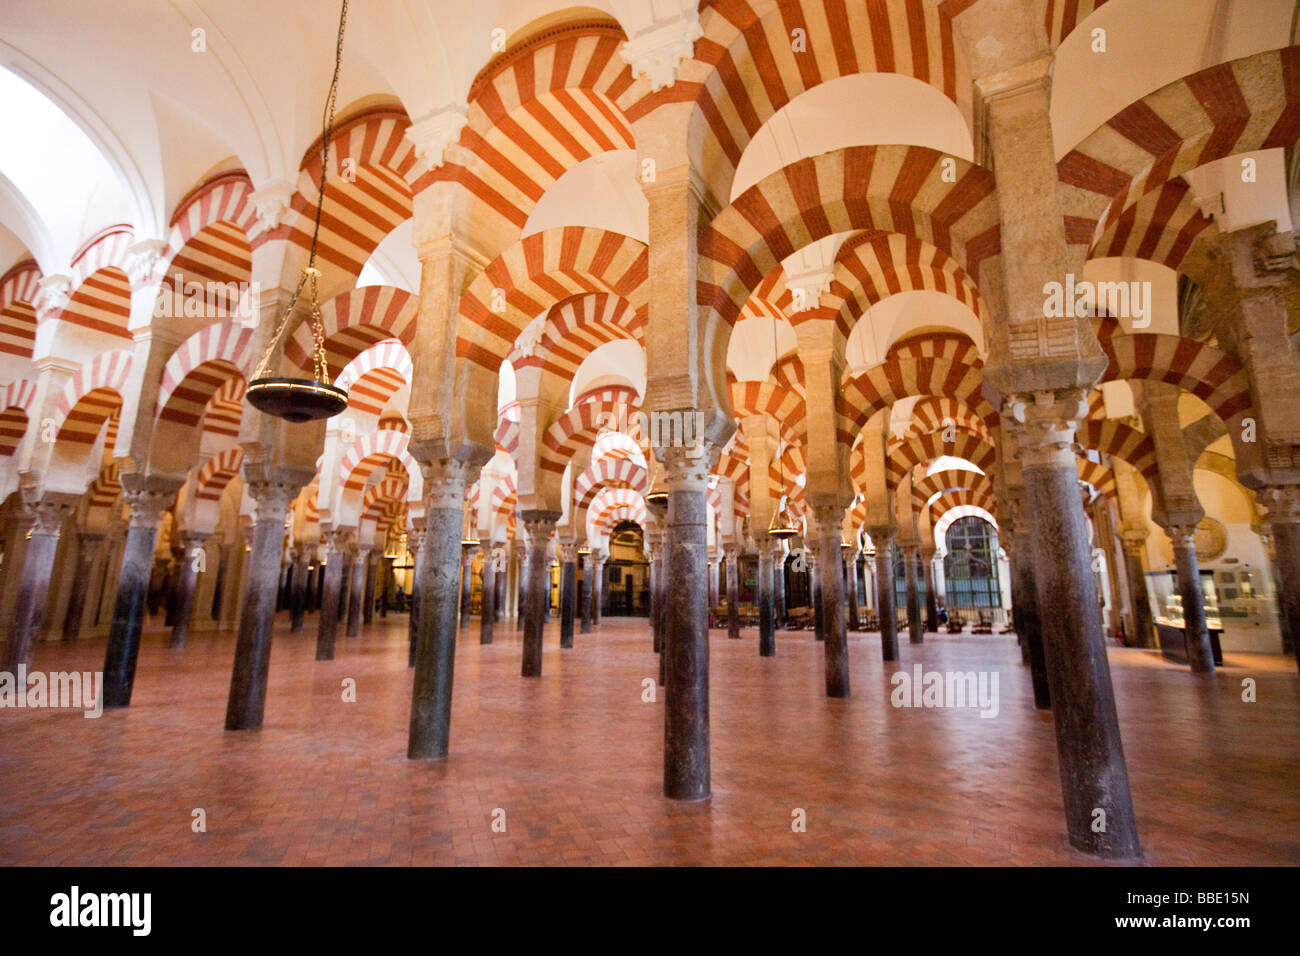 Im Inneren der Mezquita in Cordoba Spanien Stockfoto